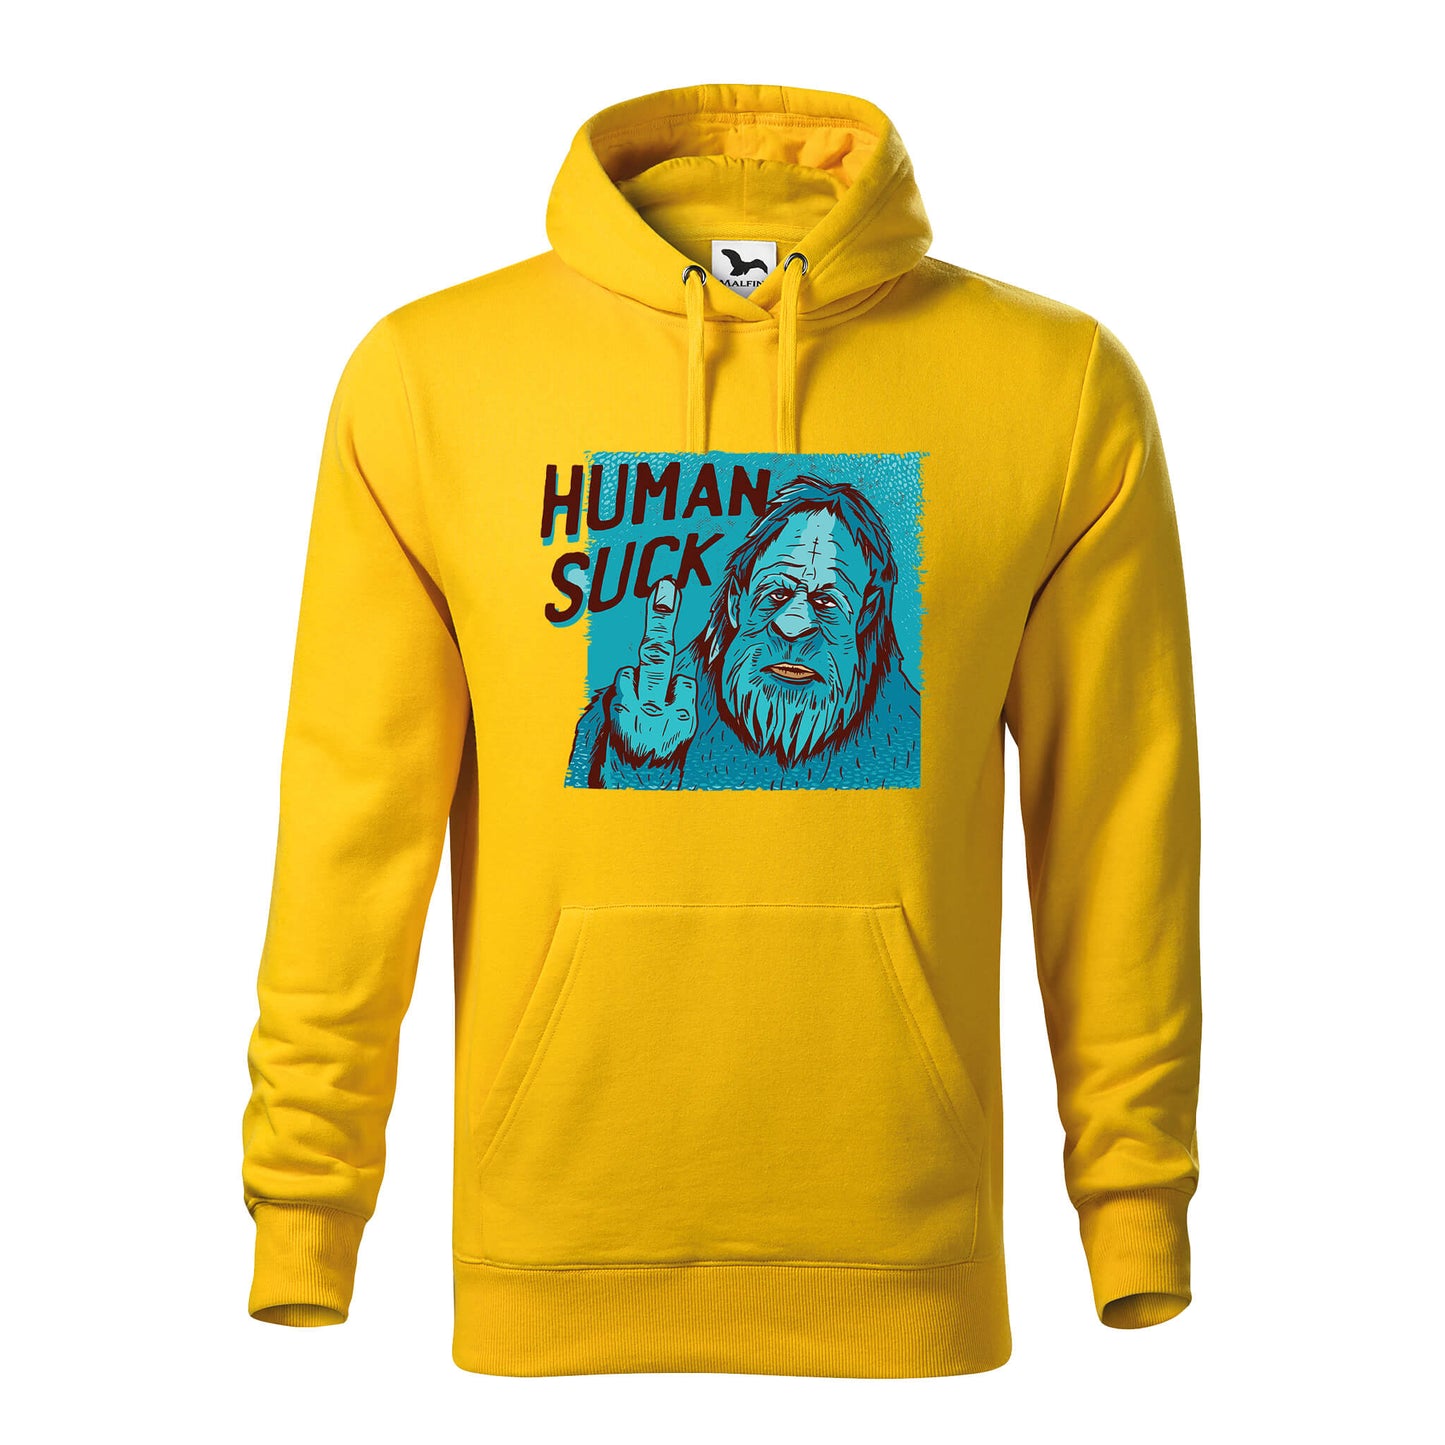 Bigfoot human suck hoodie